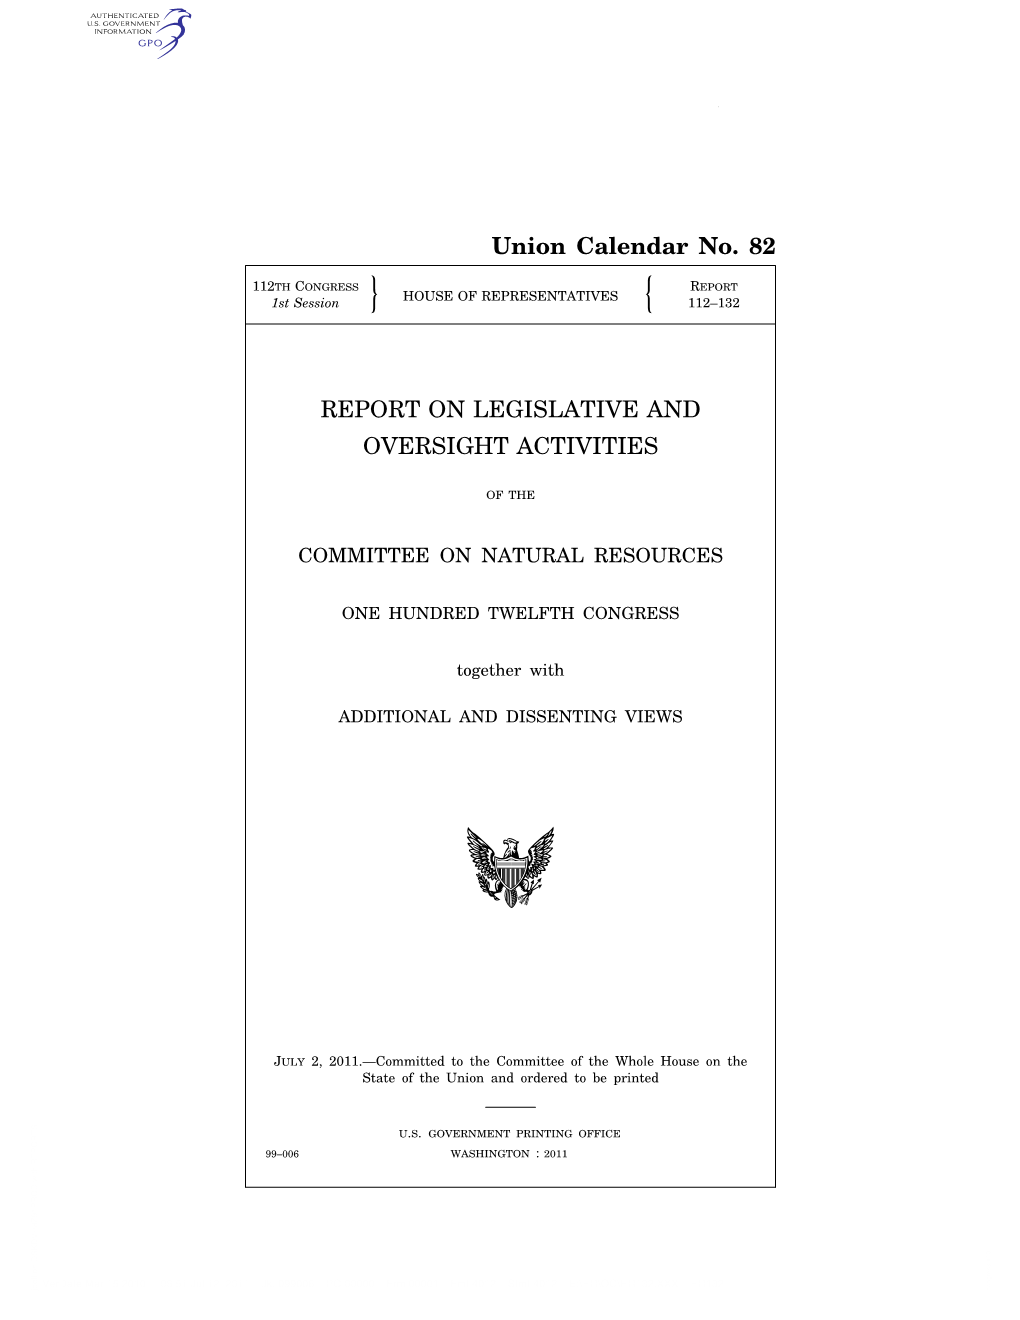 Union Calendar No. 82 REPORT on LEGISLATIVE and OVERSIGHT